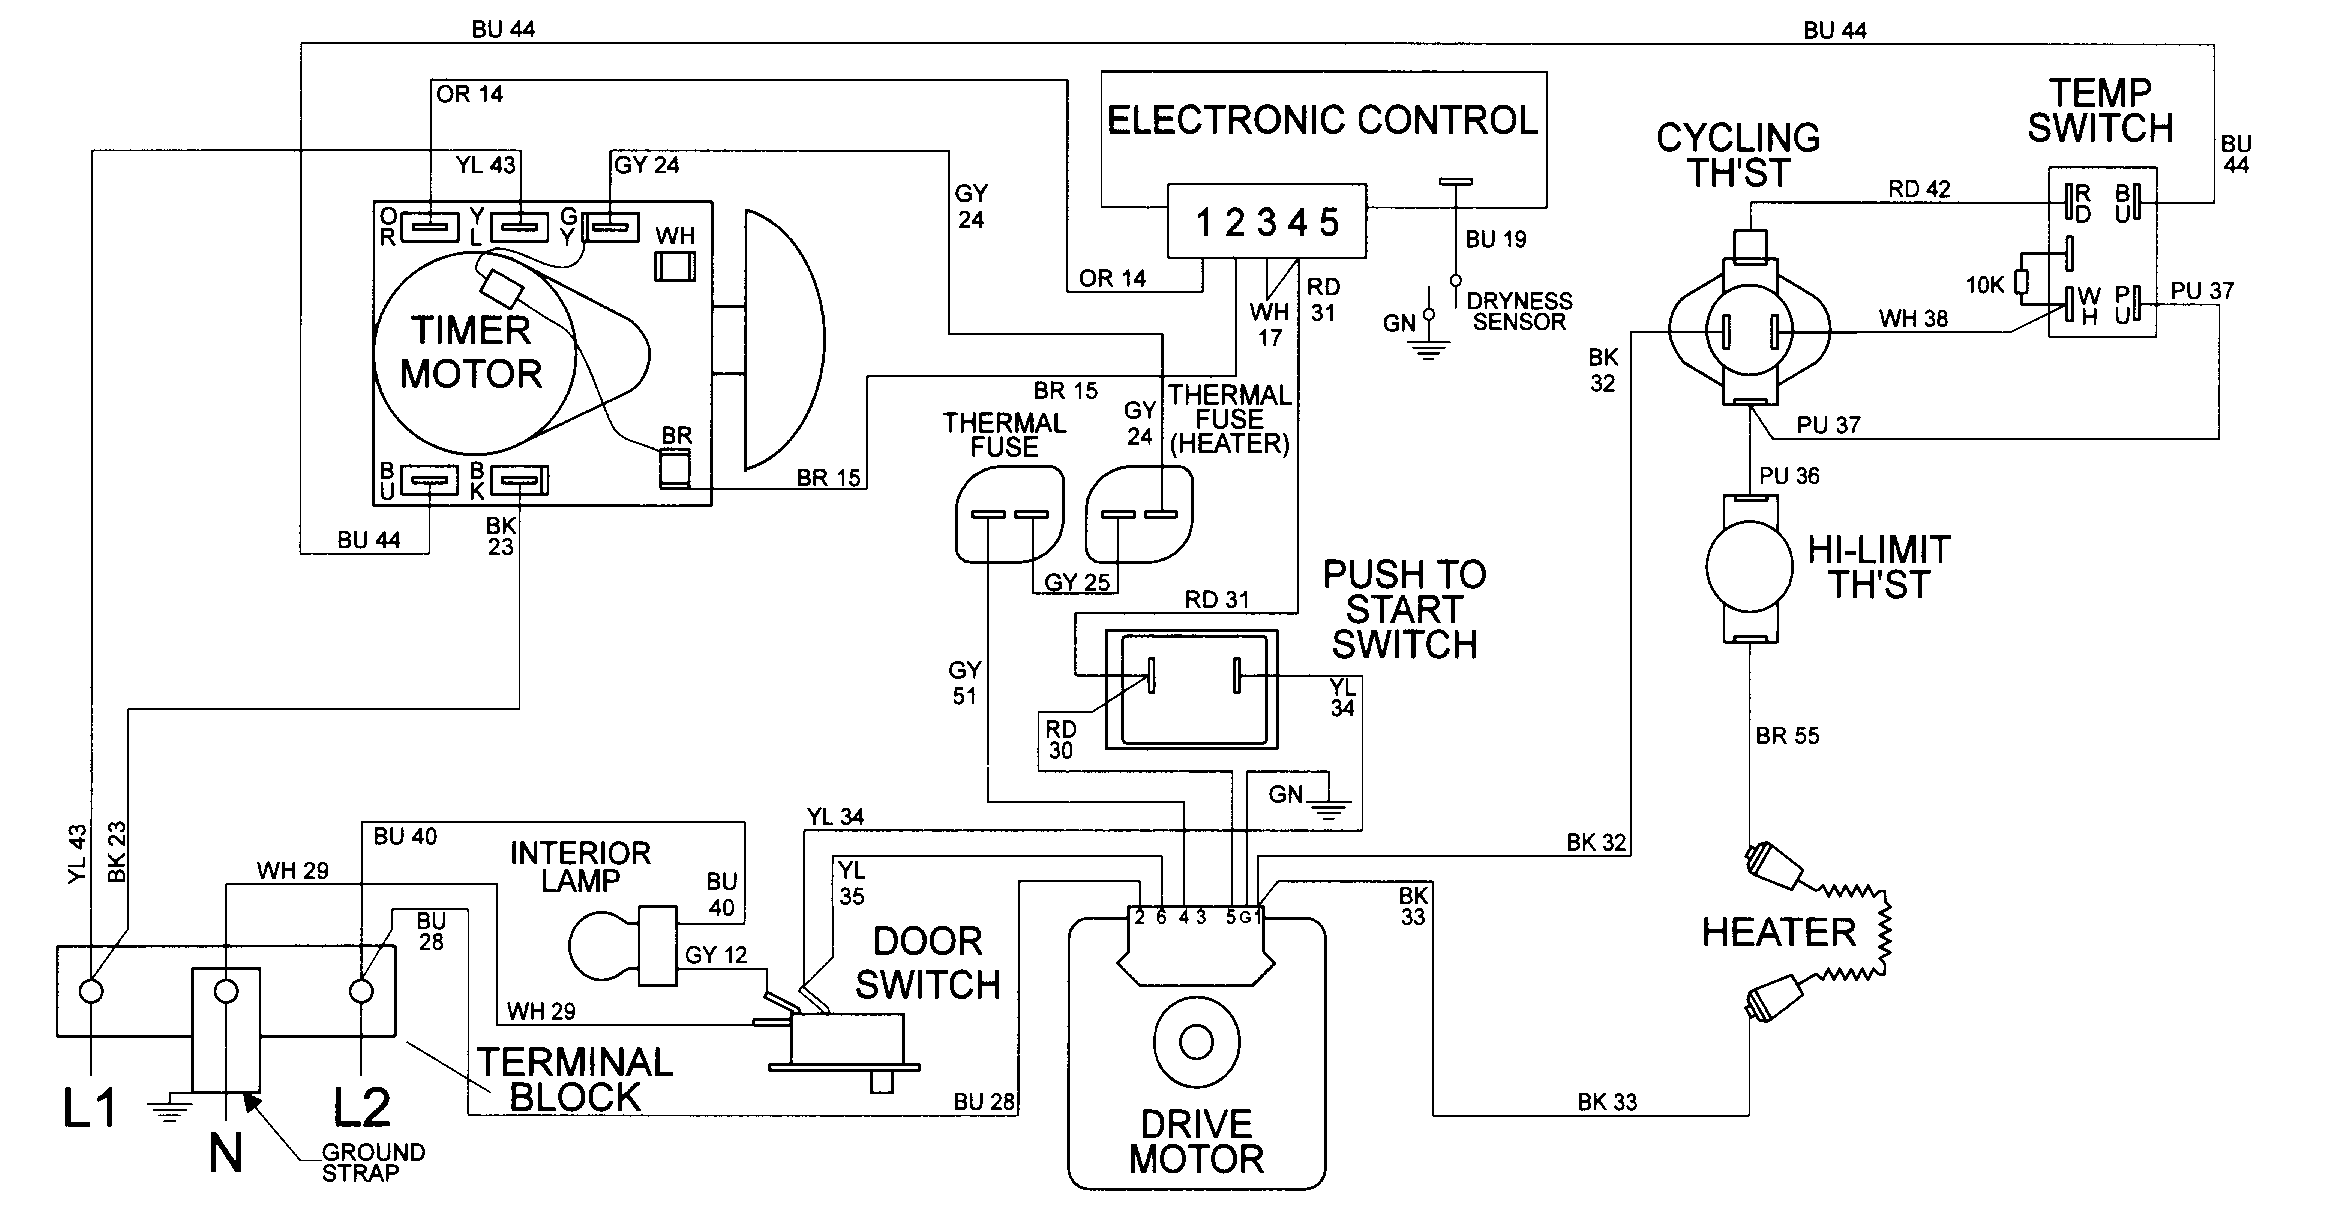 maytag part #3406015 wiring diagram